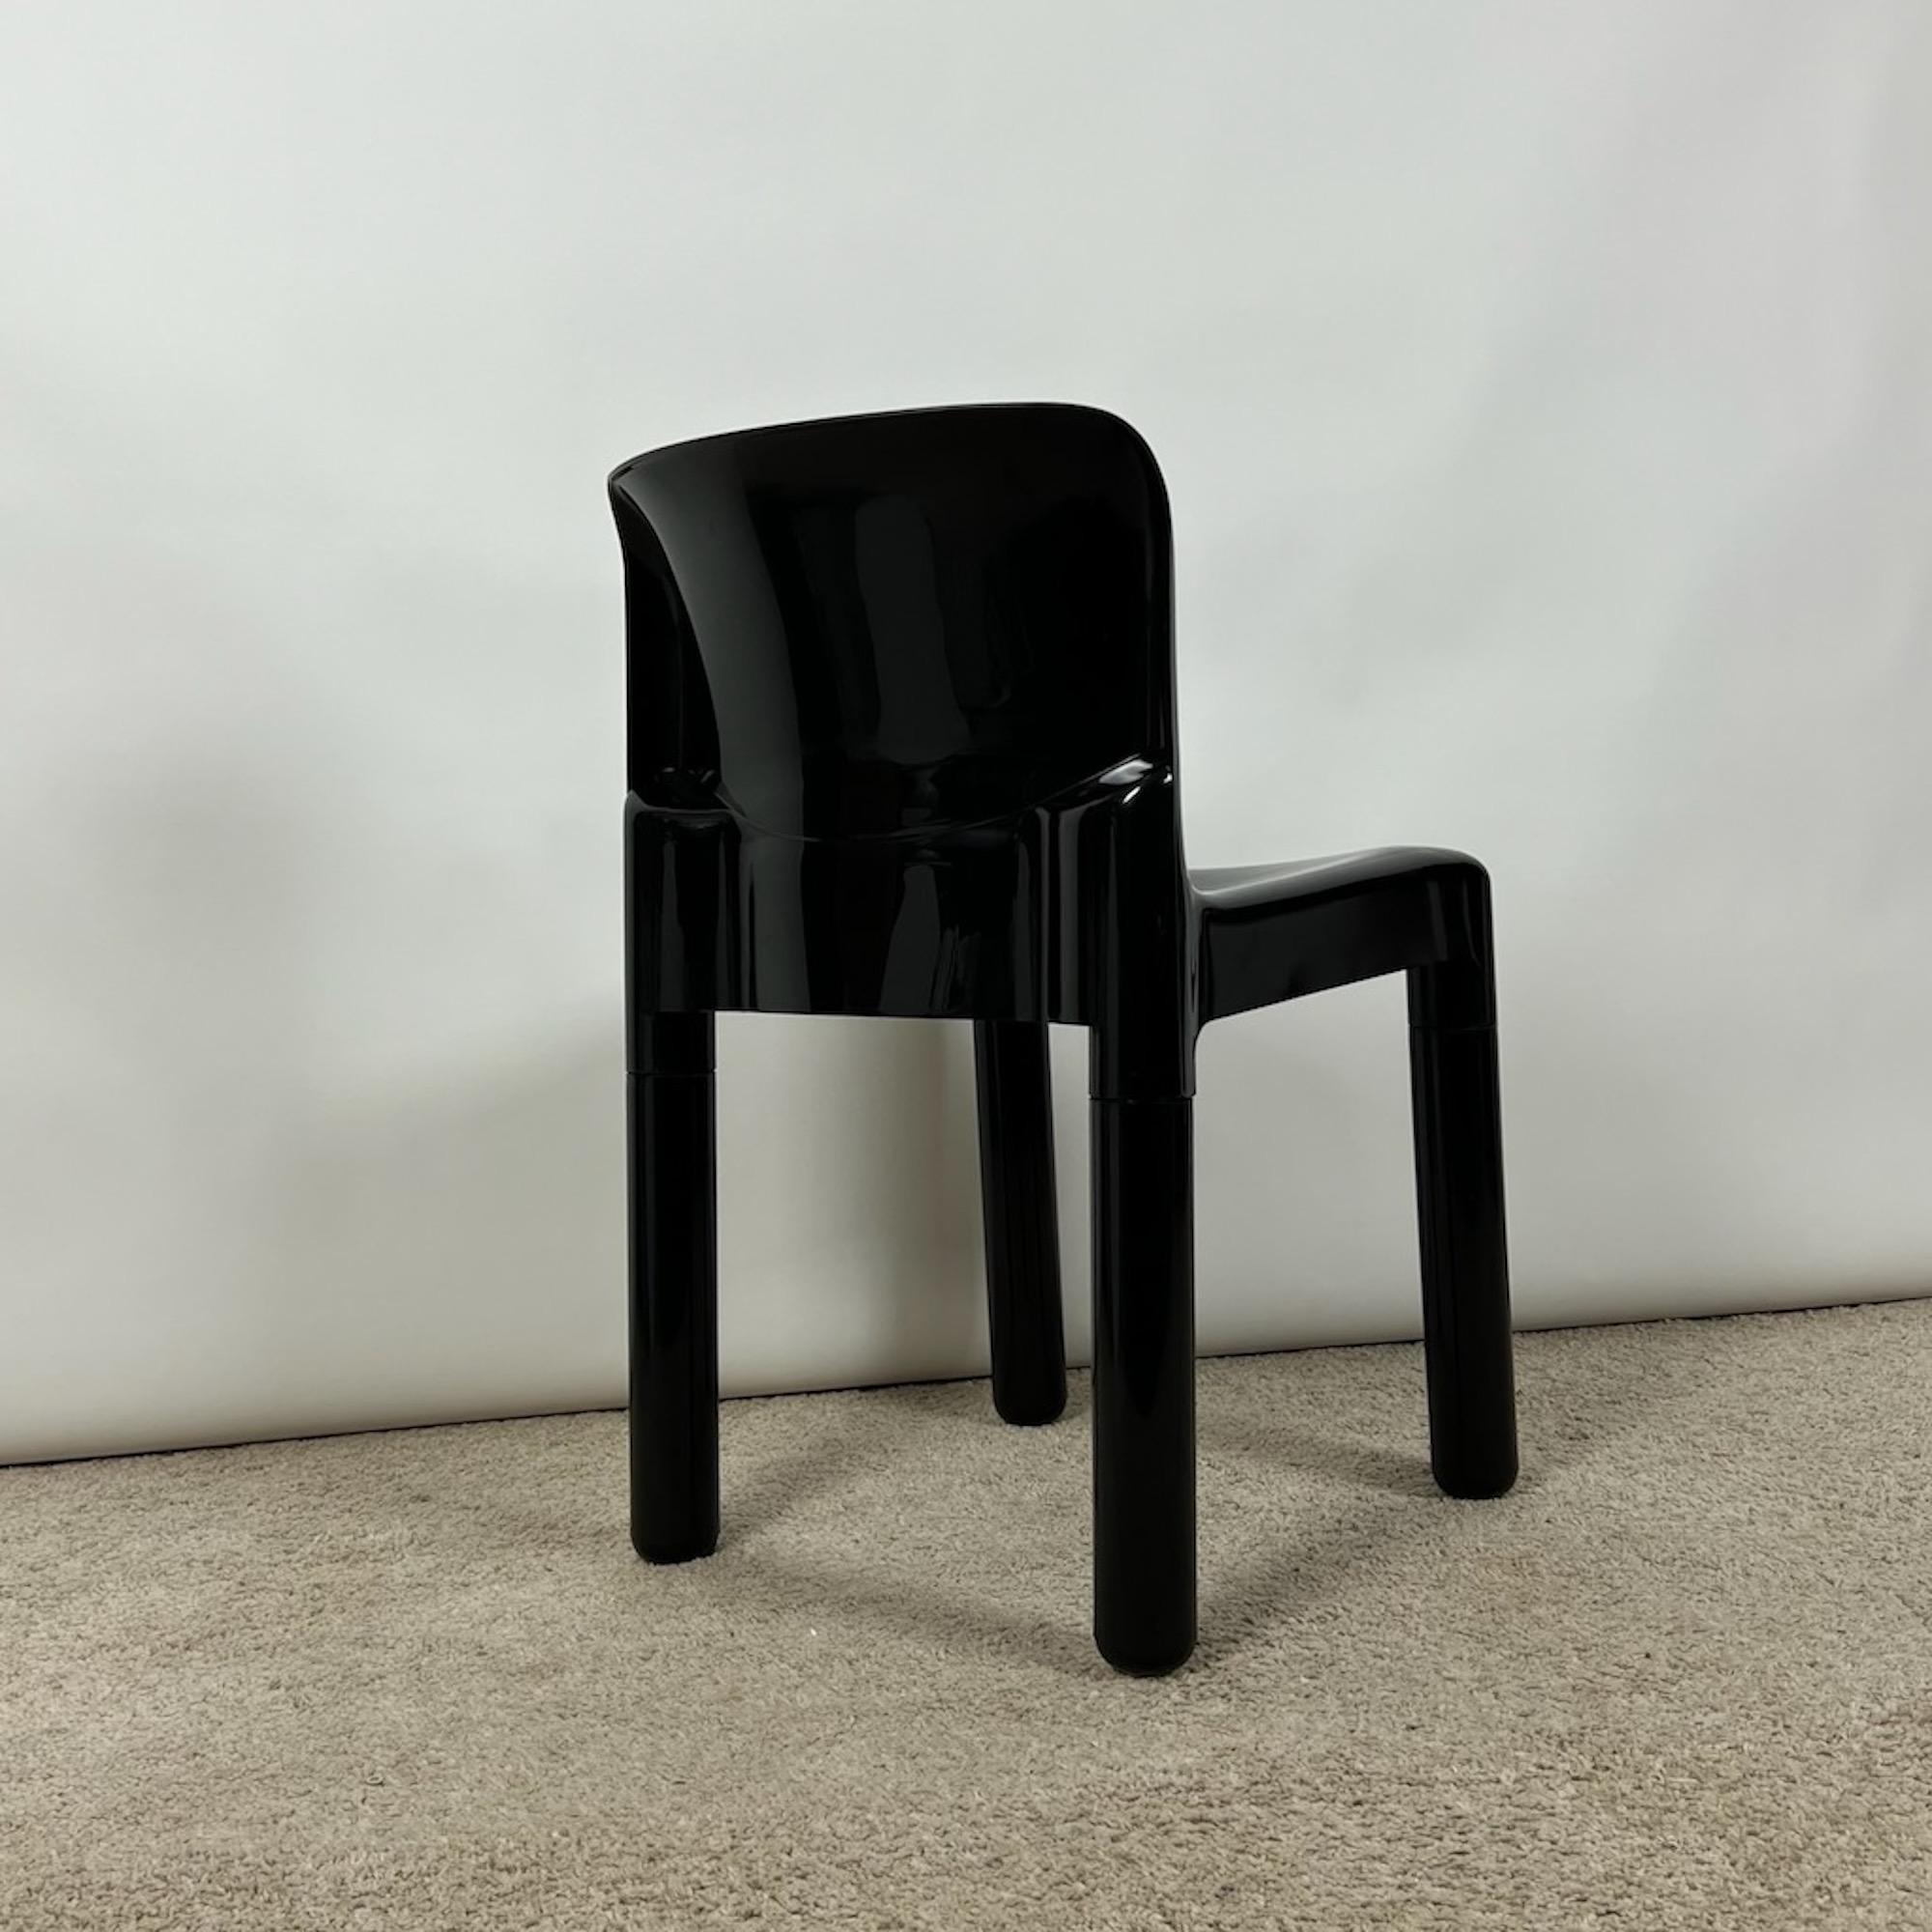 Italian Kartell Model 4875 Chair by Carlo Bartoli - 1985 Edition New Old Stock in Black